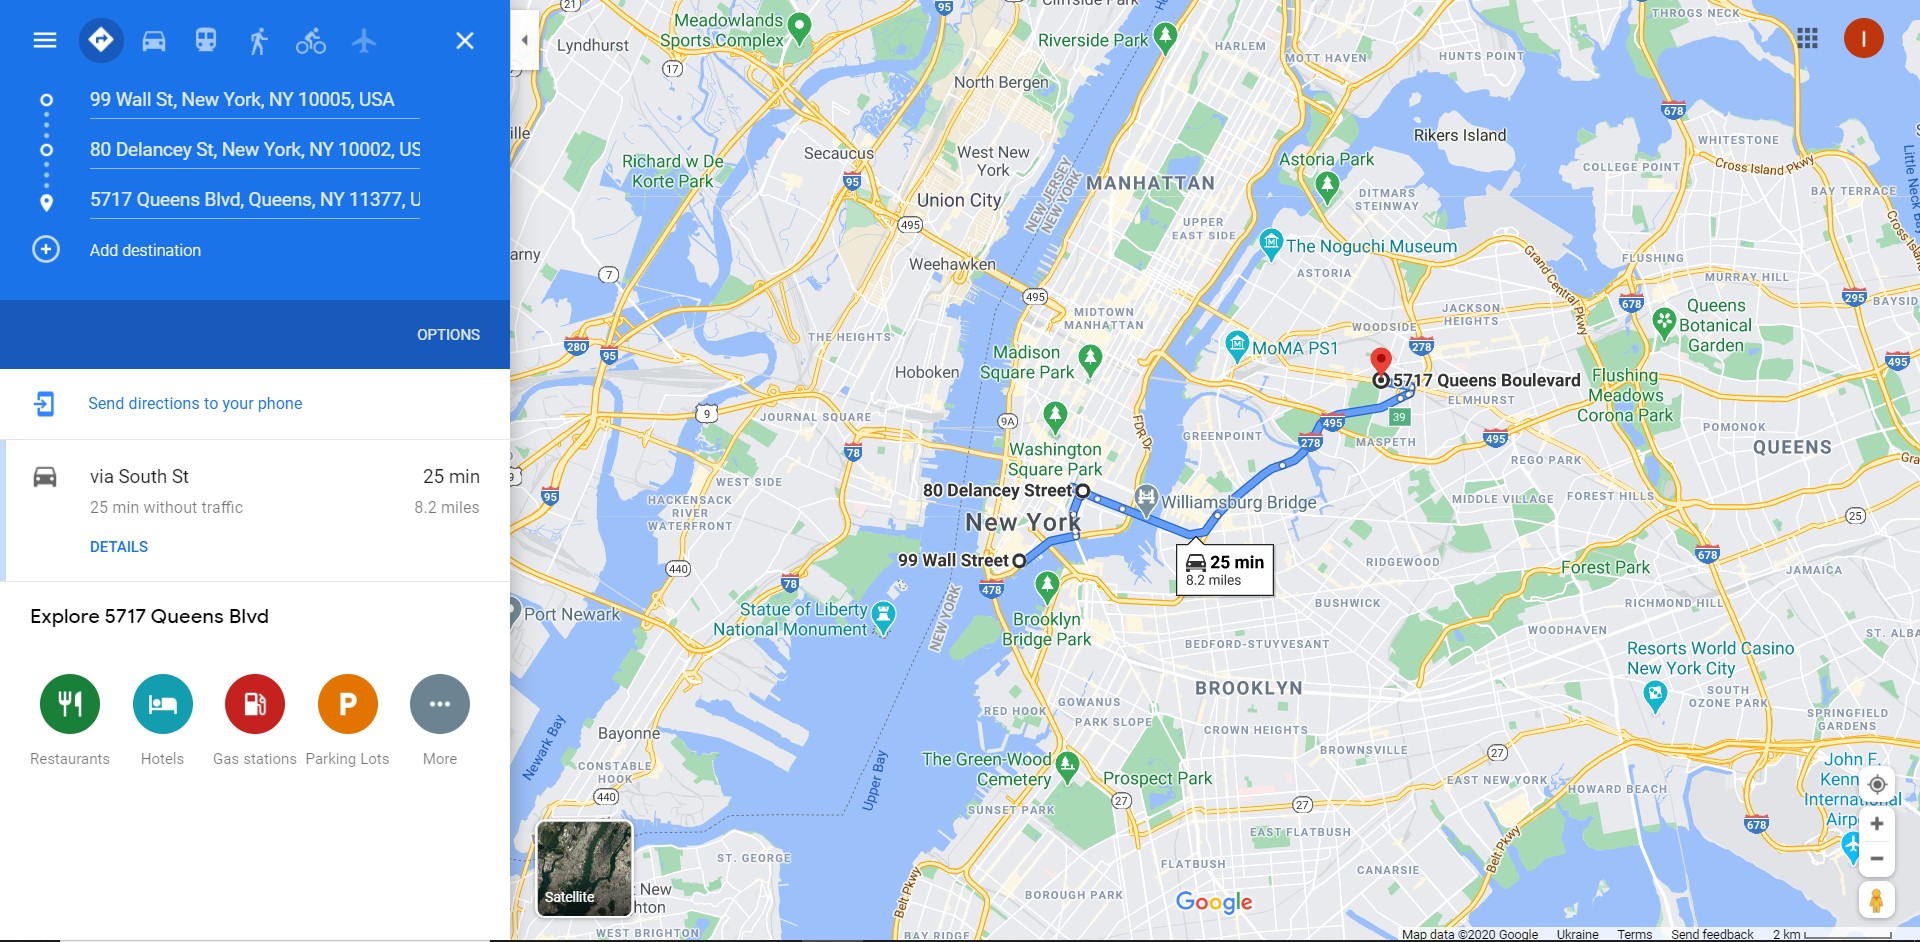 Market Place on Google Maps Platform